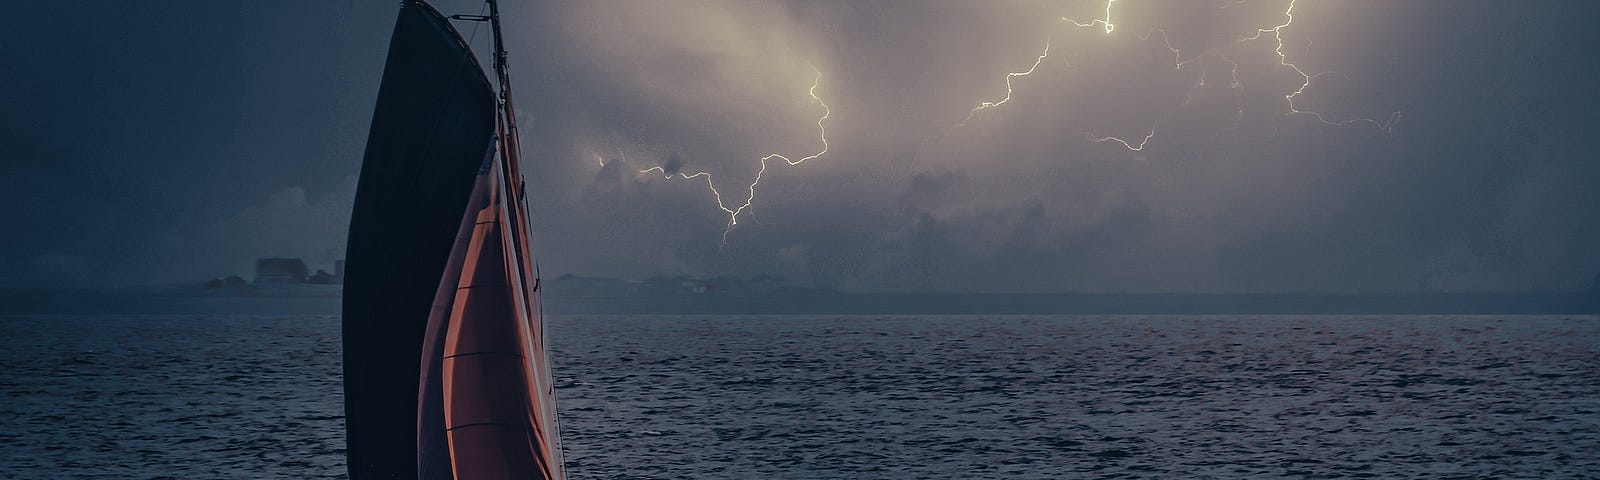 Sailboat sailing ahead of a thunderstorm